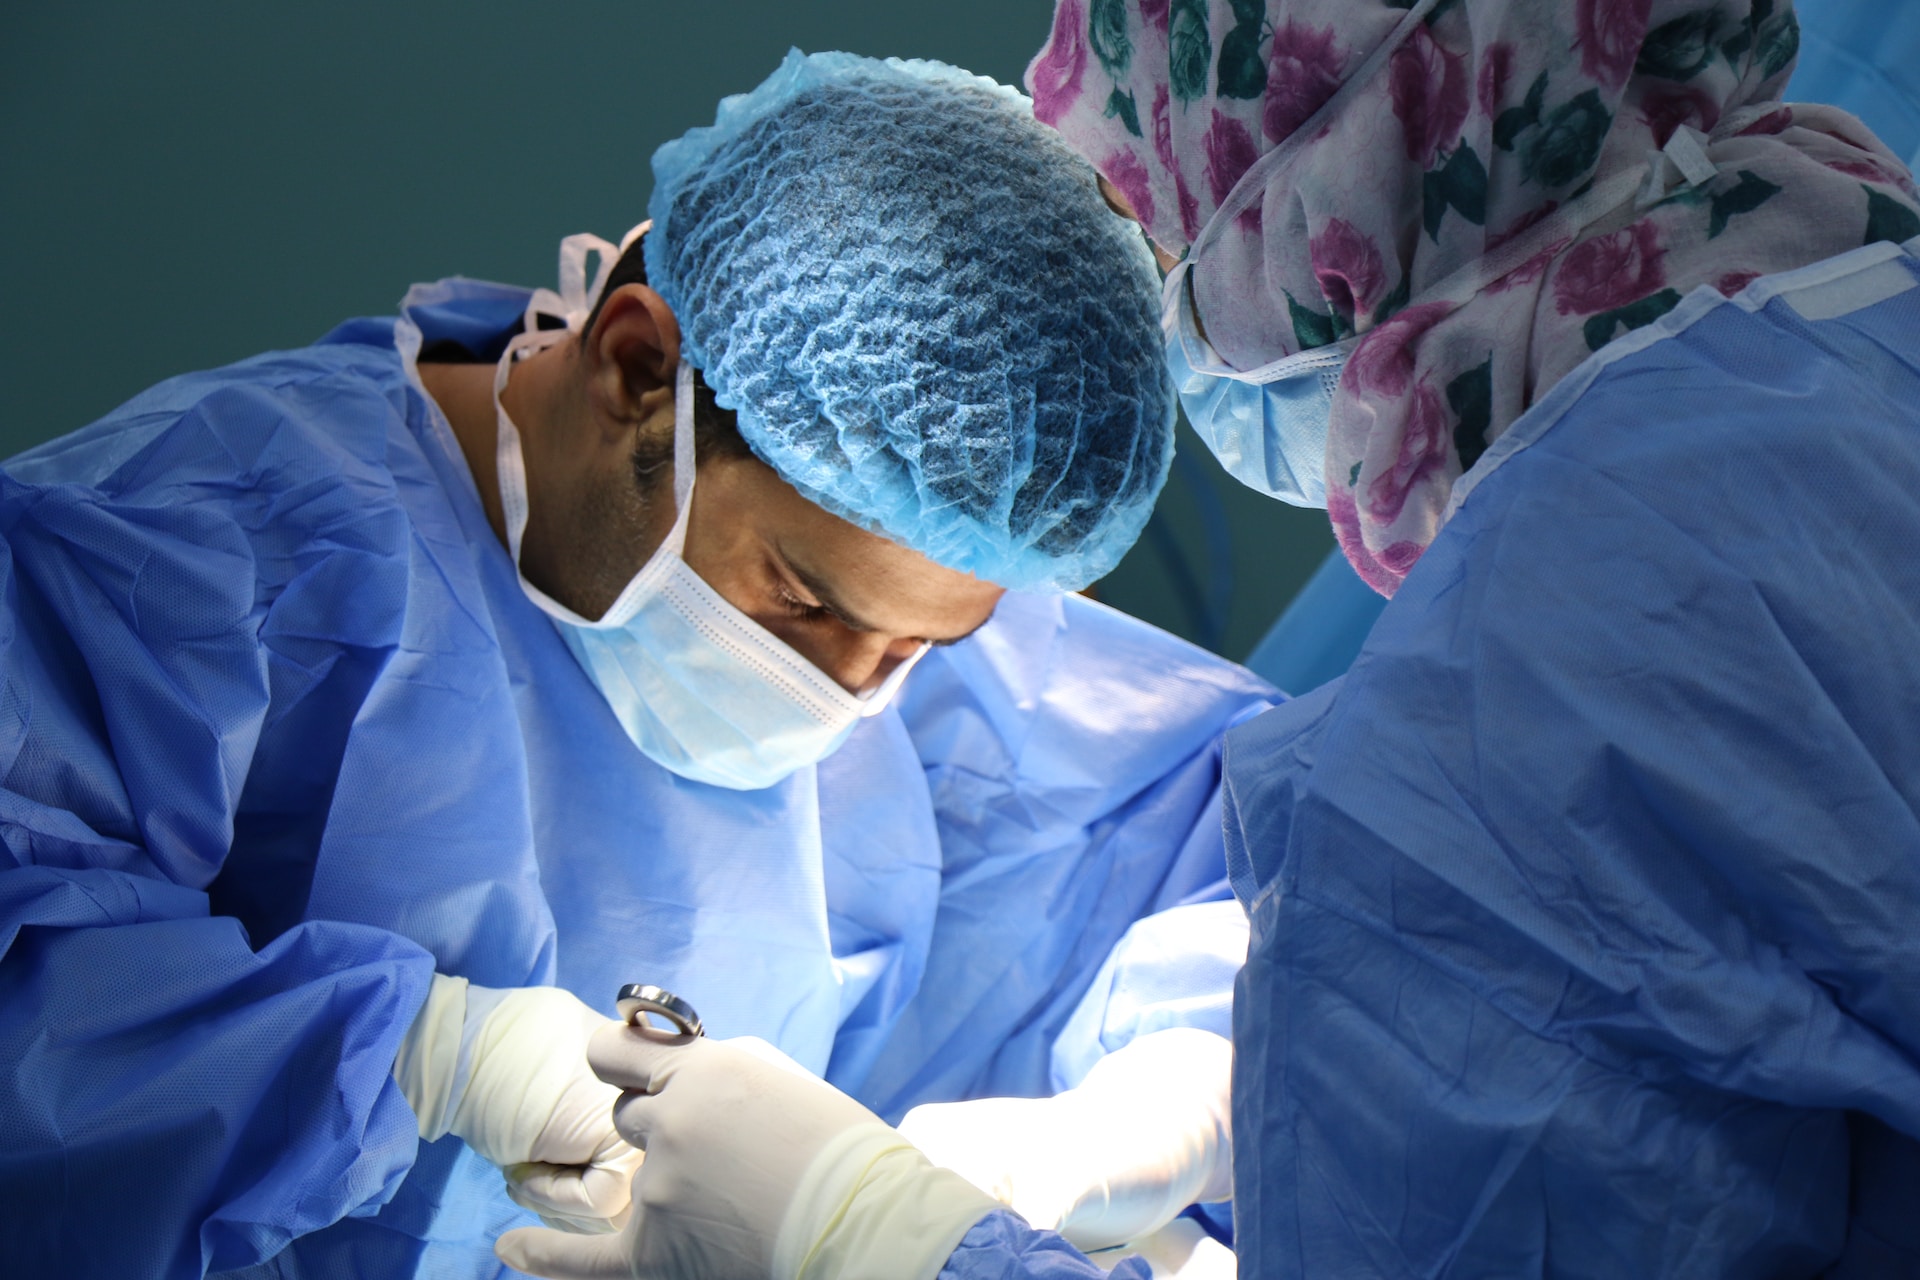 Two surgeons operating